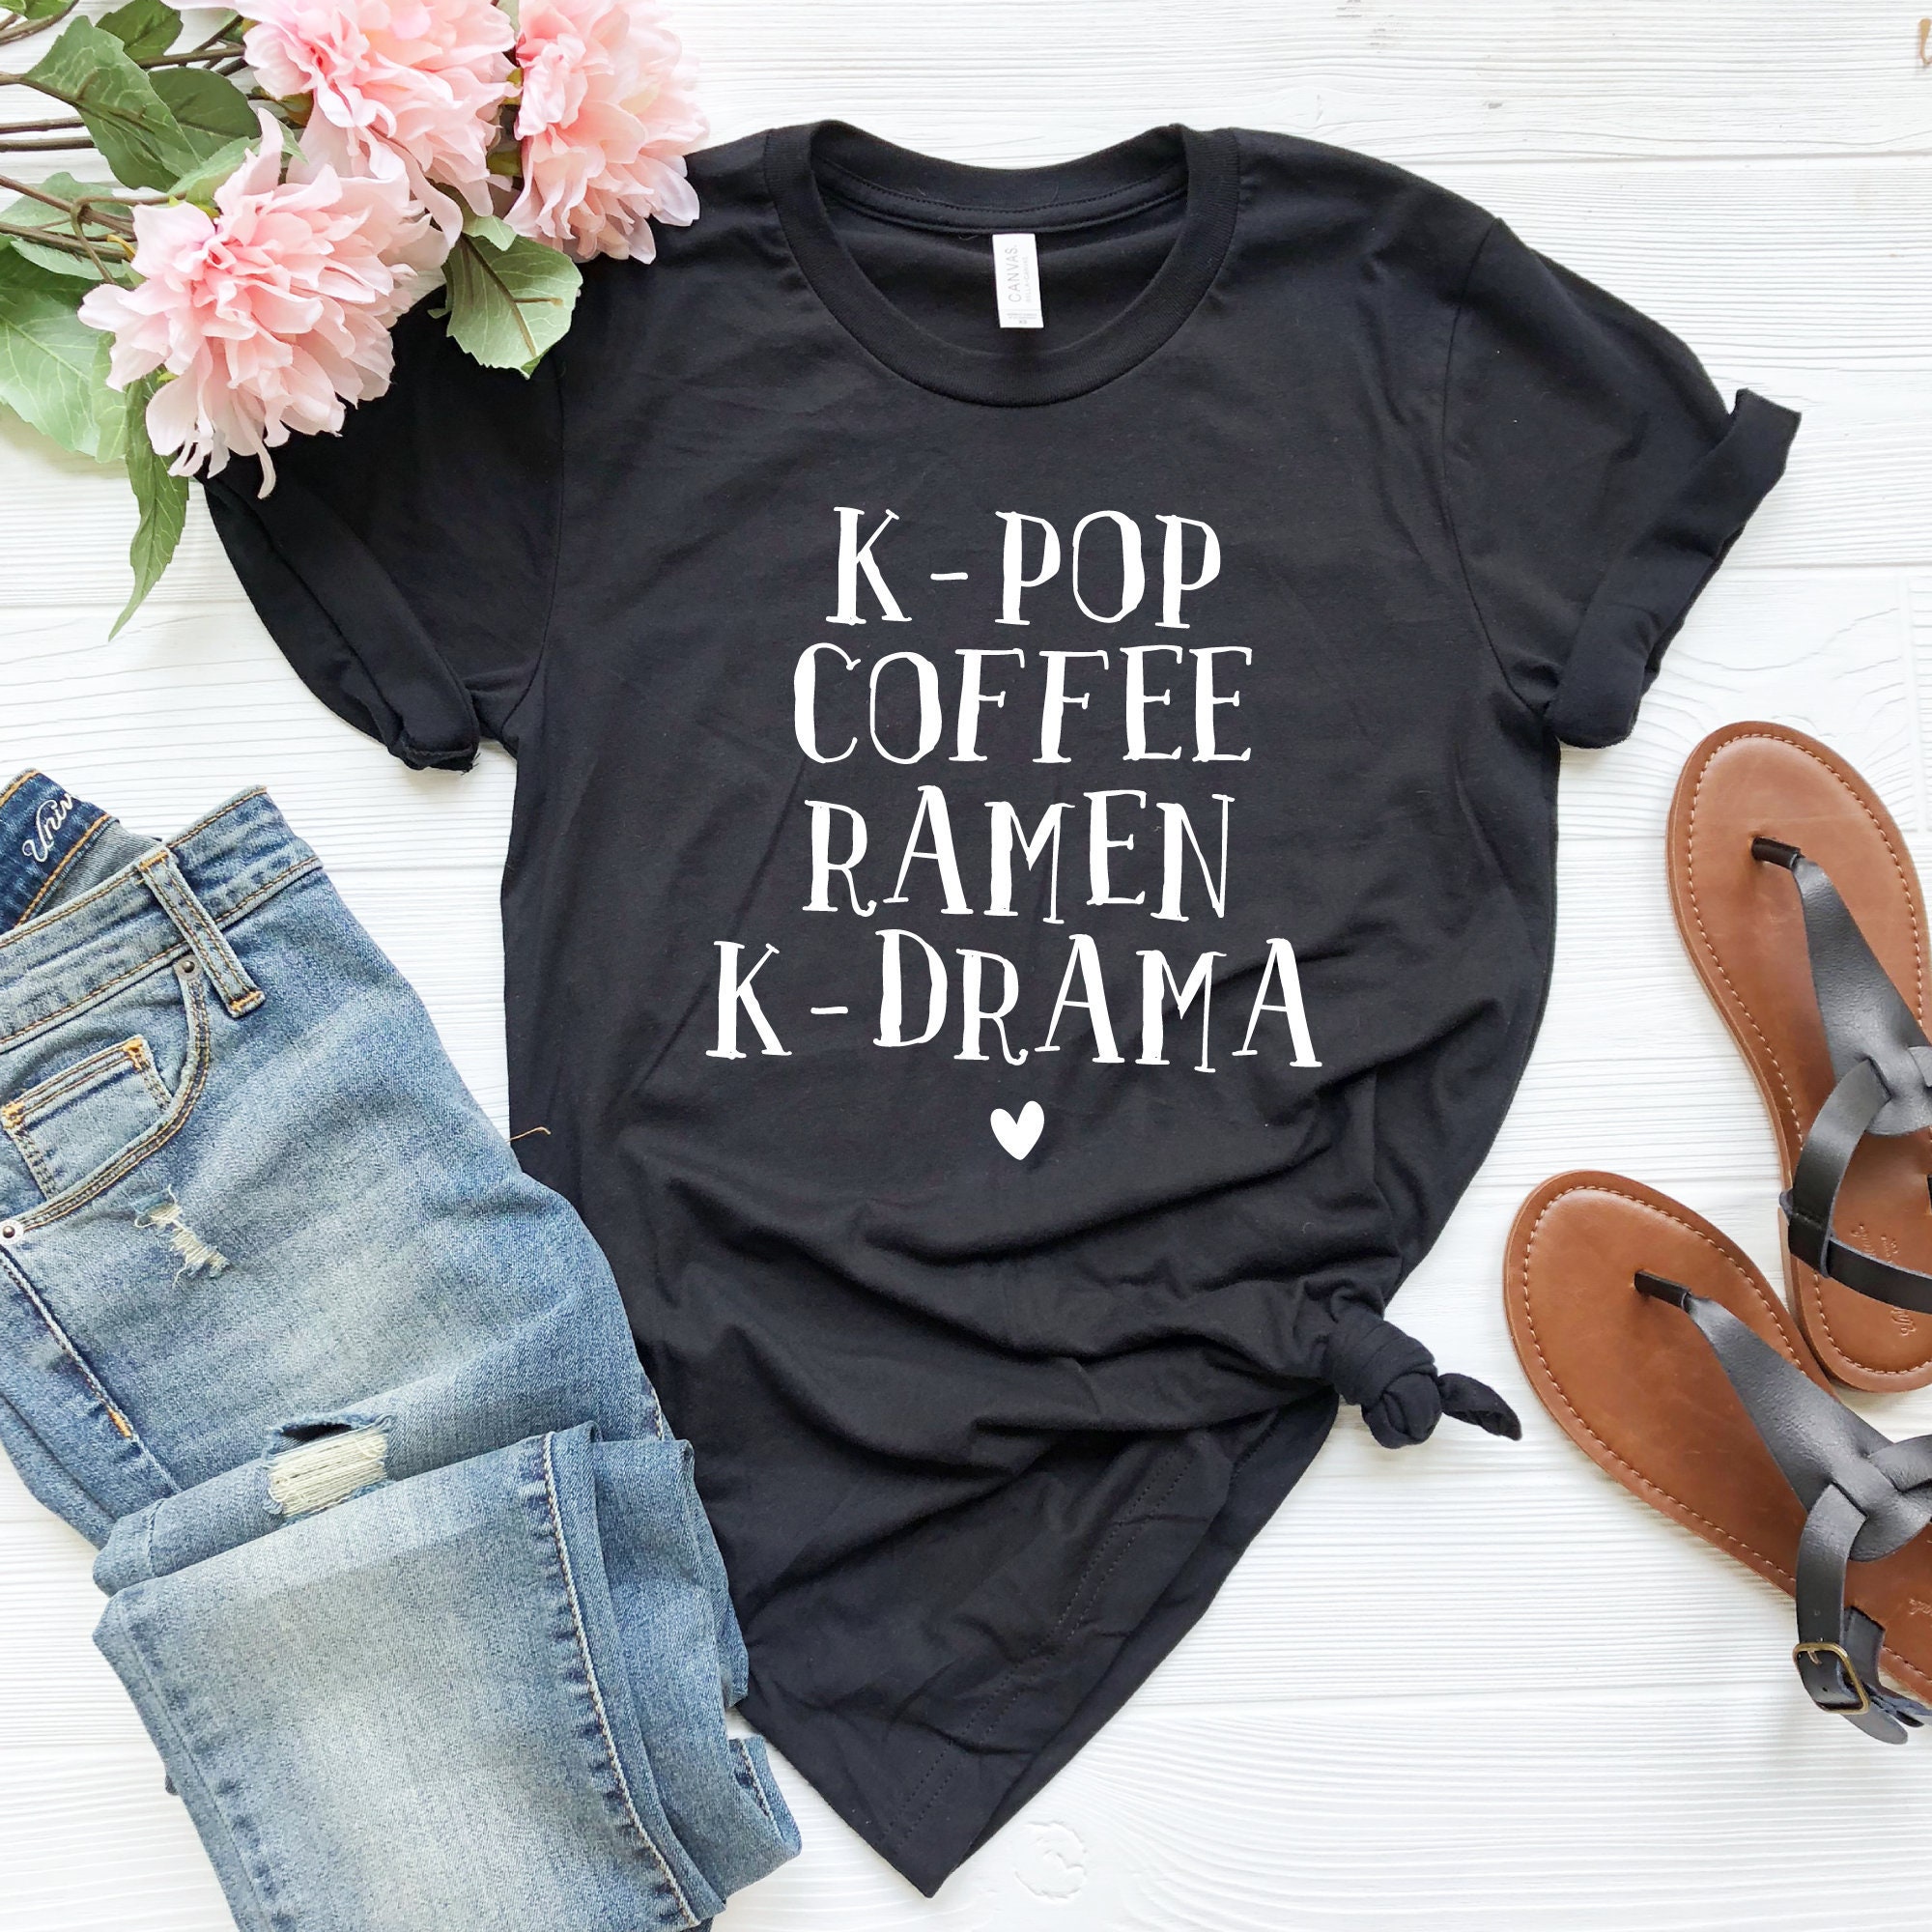 K-Pop Coffee Ramen K-Drama Shirt Korean Drama Kpop Gift Tee Gifts